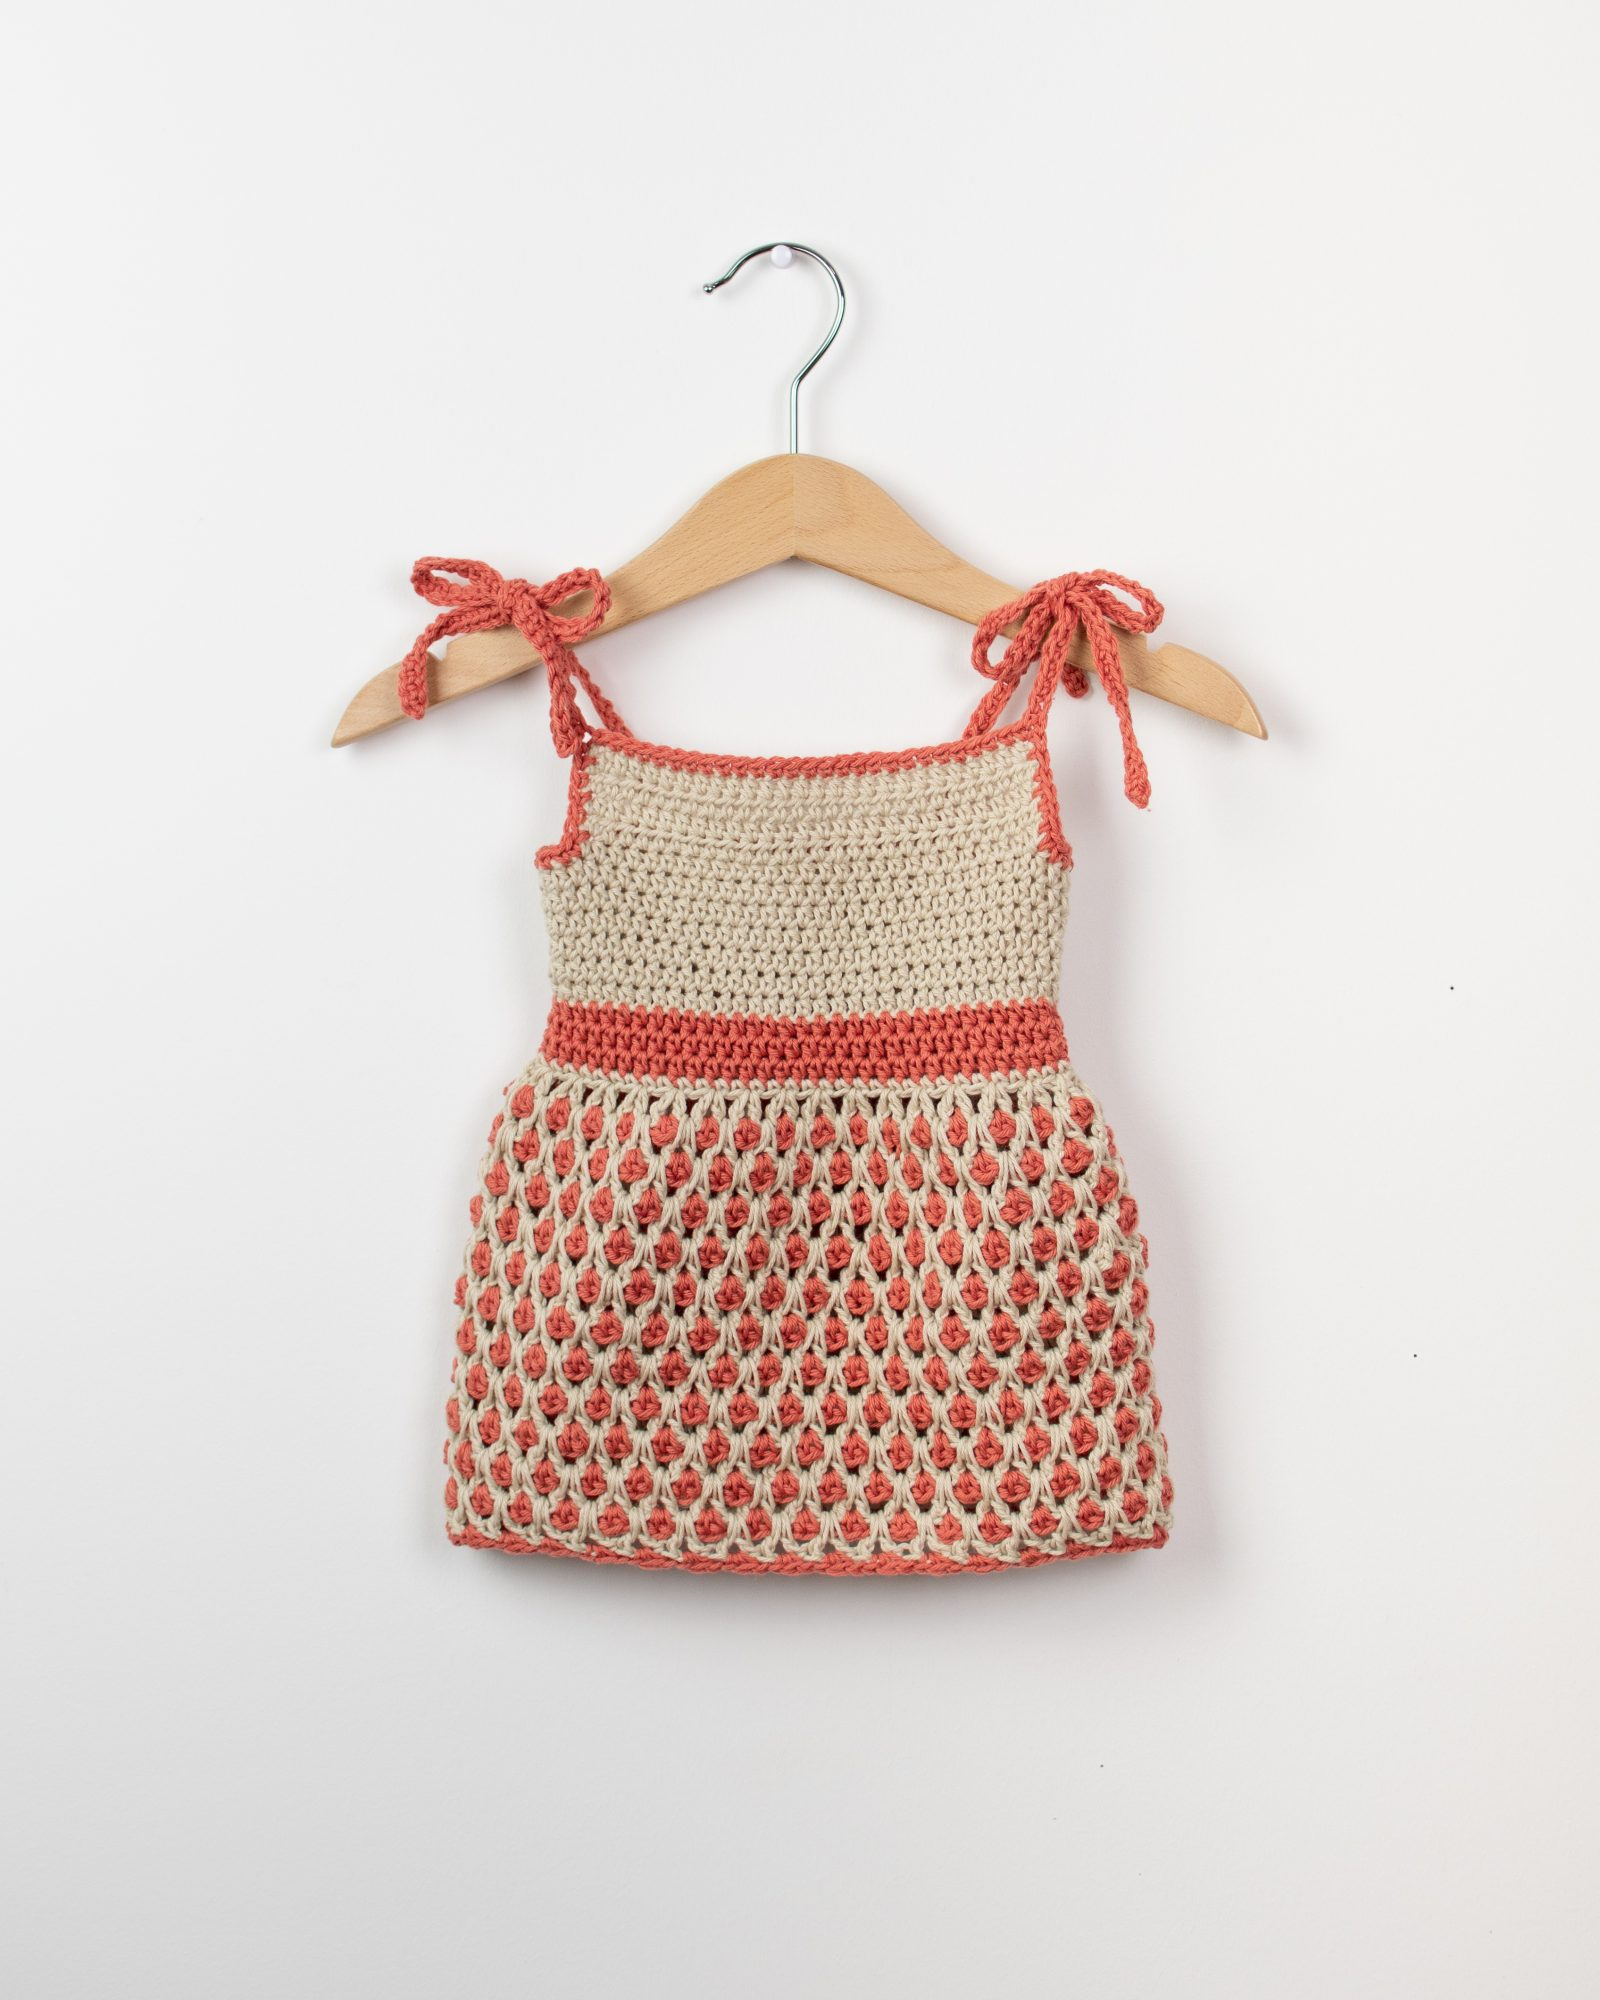 Crochet Toddler Dress Pattern Crochet Pattern For A Ba Dress Little Ladybug Cro Patterns